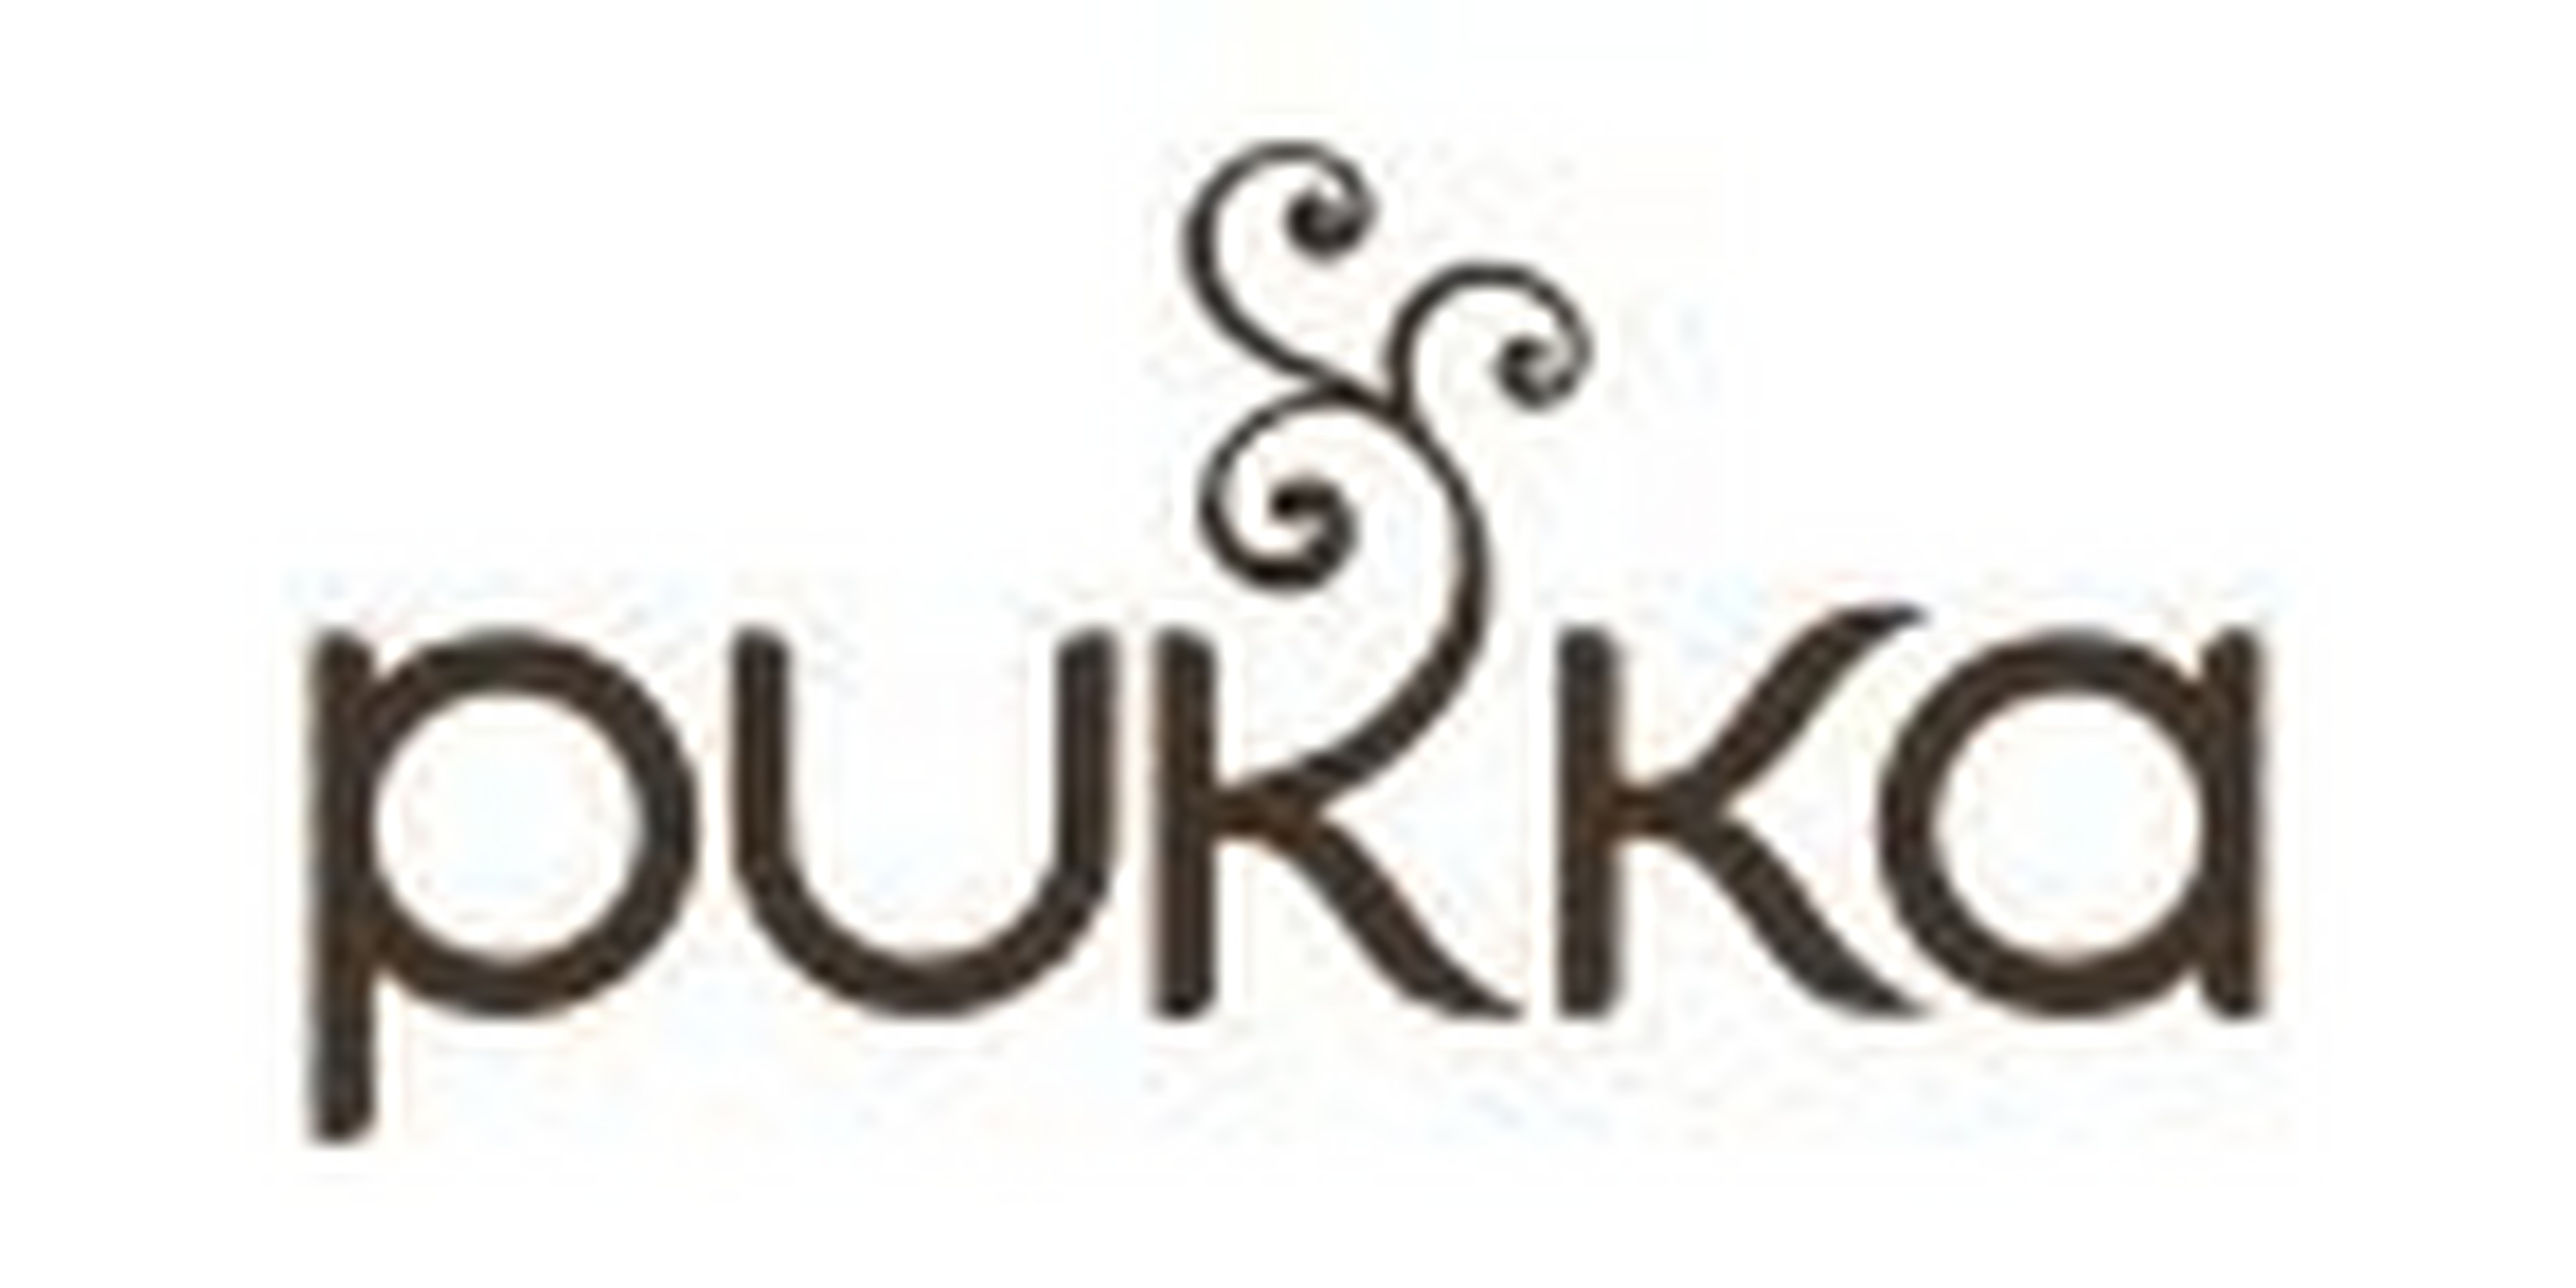 Pukka logotype